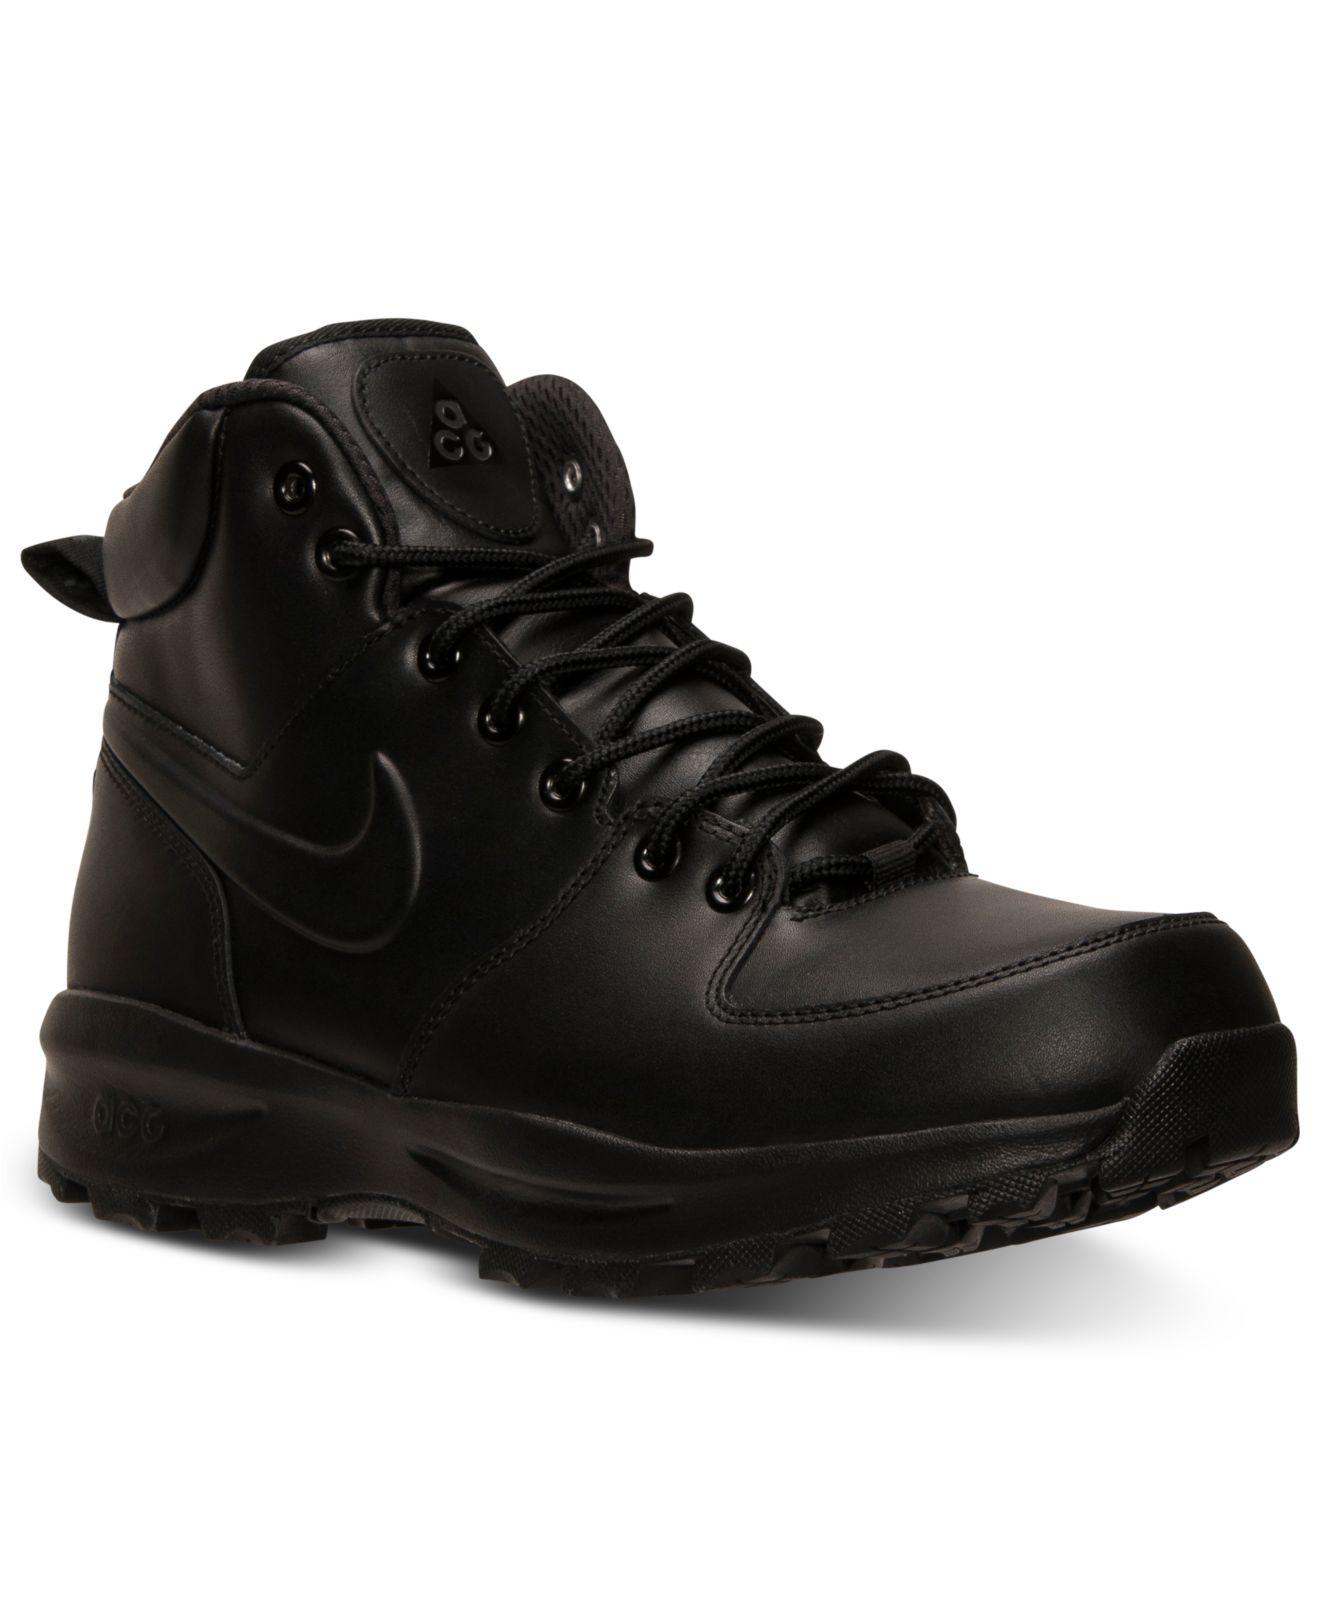 Nike Leather Manoa in Black/Black/Black (Black) for Men - Save 45% - Lyst